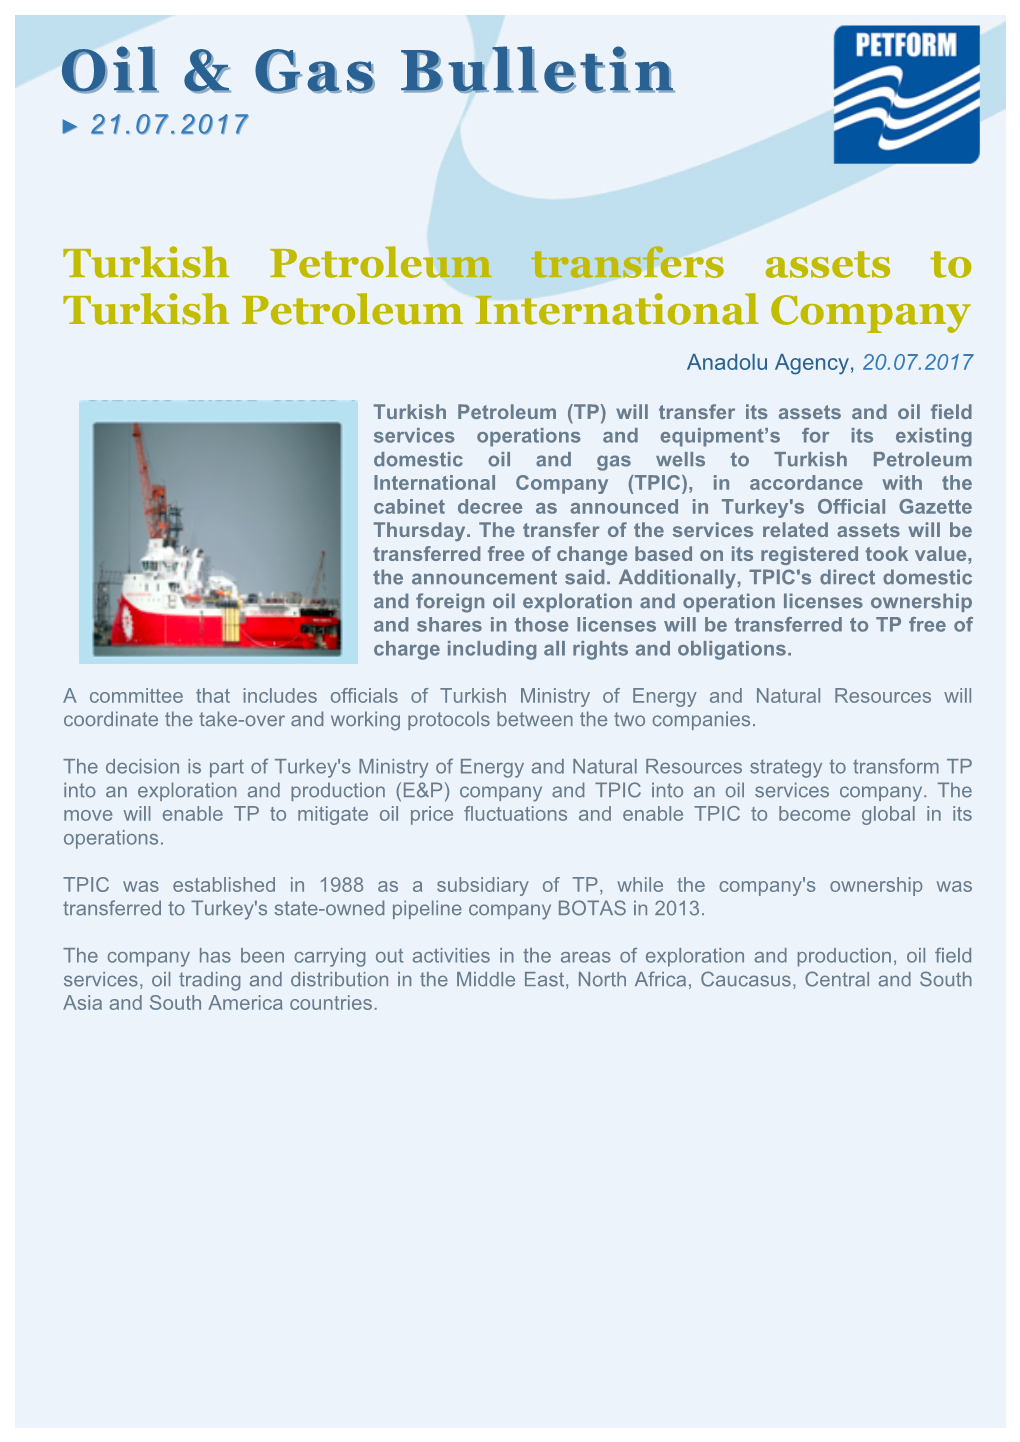 Oil & Gas Bulletin Oil & Gas Bulletin